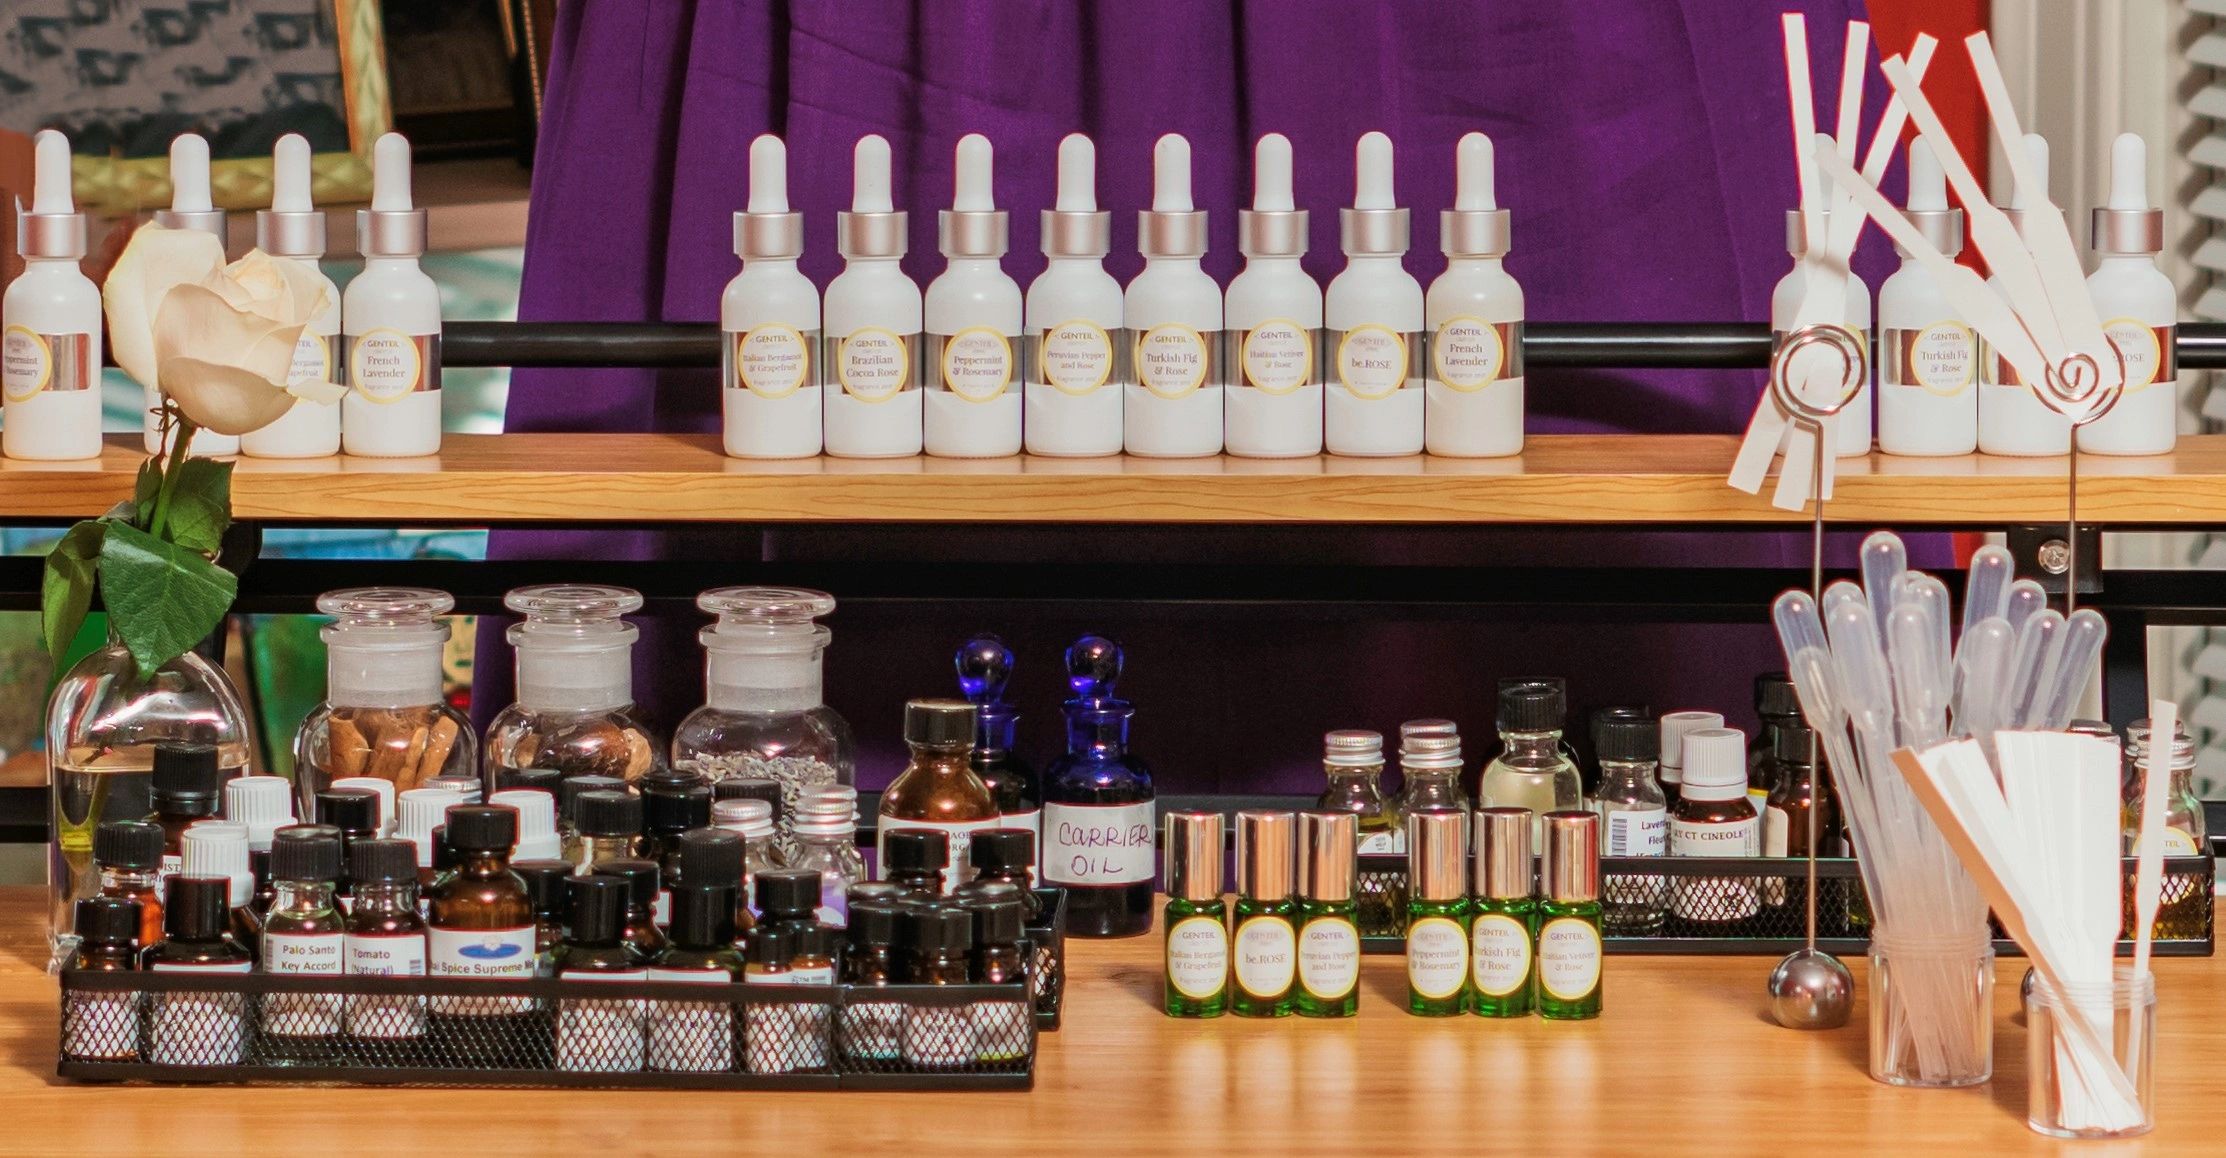 Close up photo of Terees Western's perfumer's organ. White lab bottles on top shelf. Apothecary bott